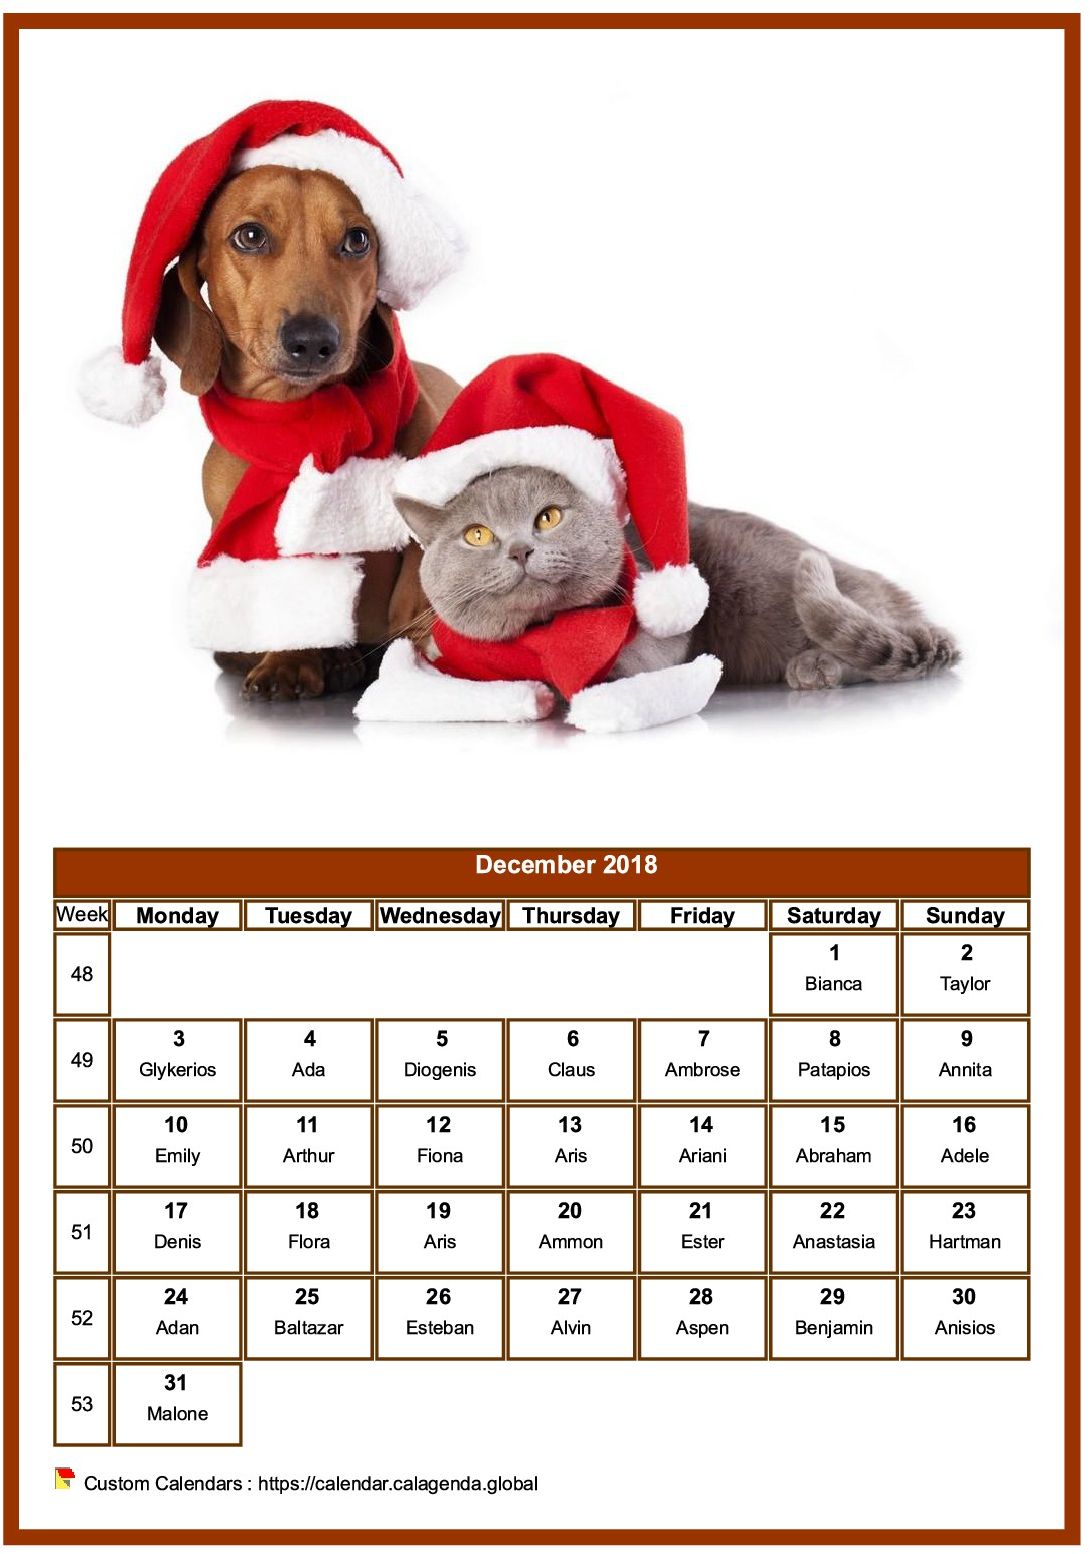 Calendar December 2018 dogs